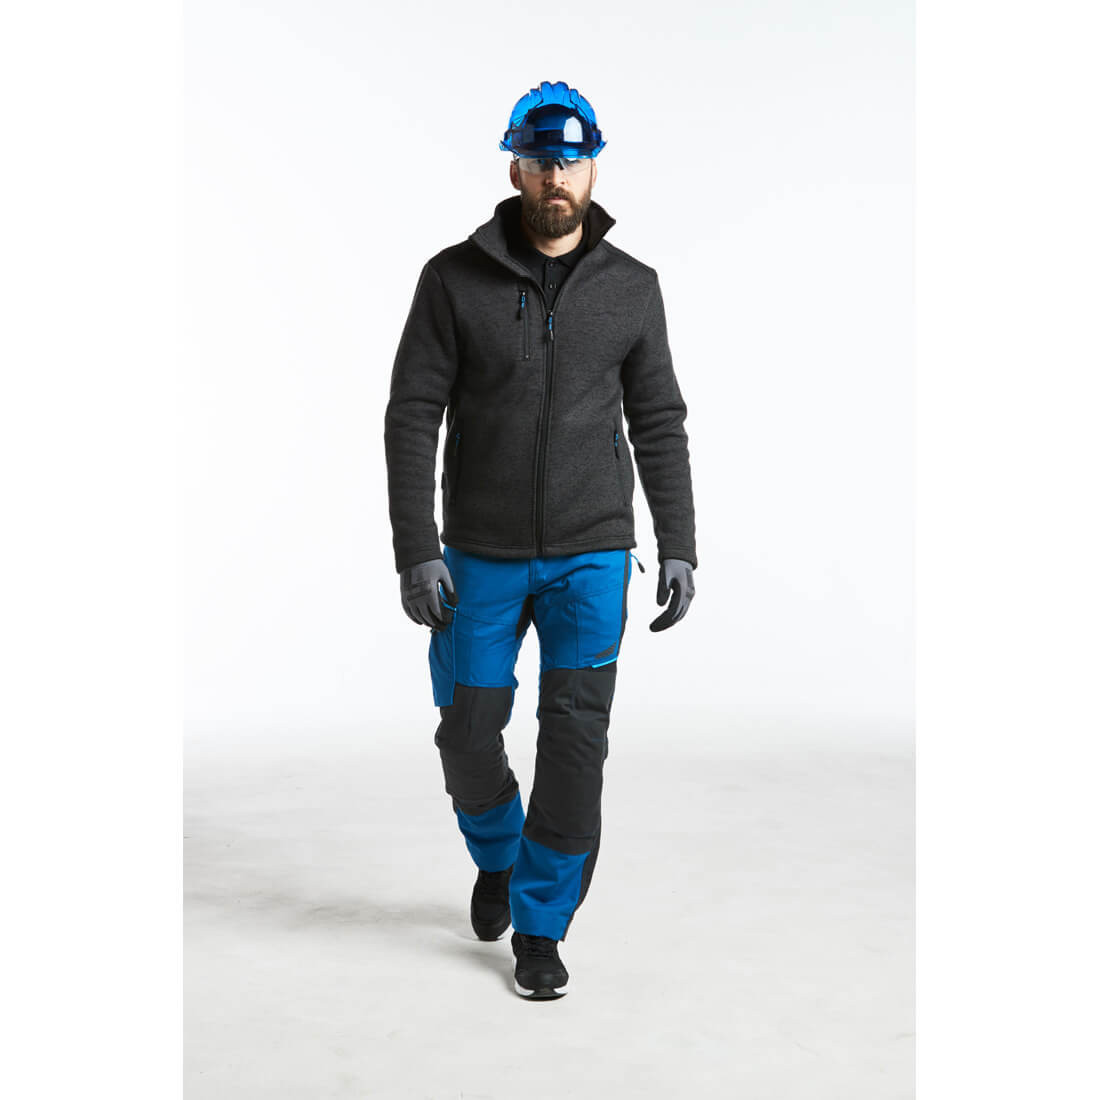 Pantaloni WX3 - Imbracaminte de protectie